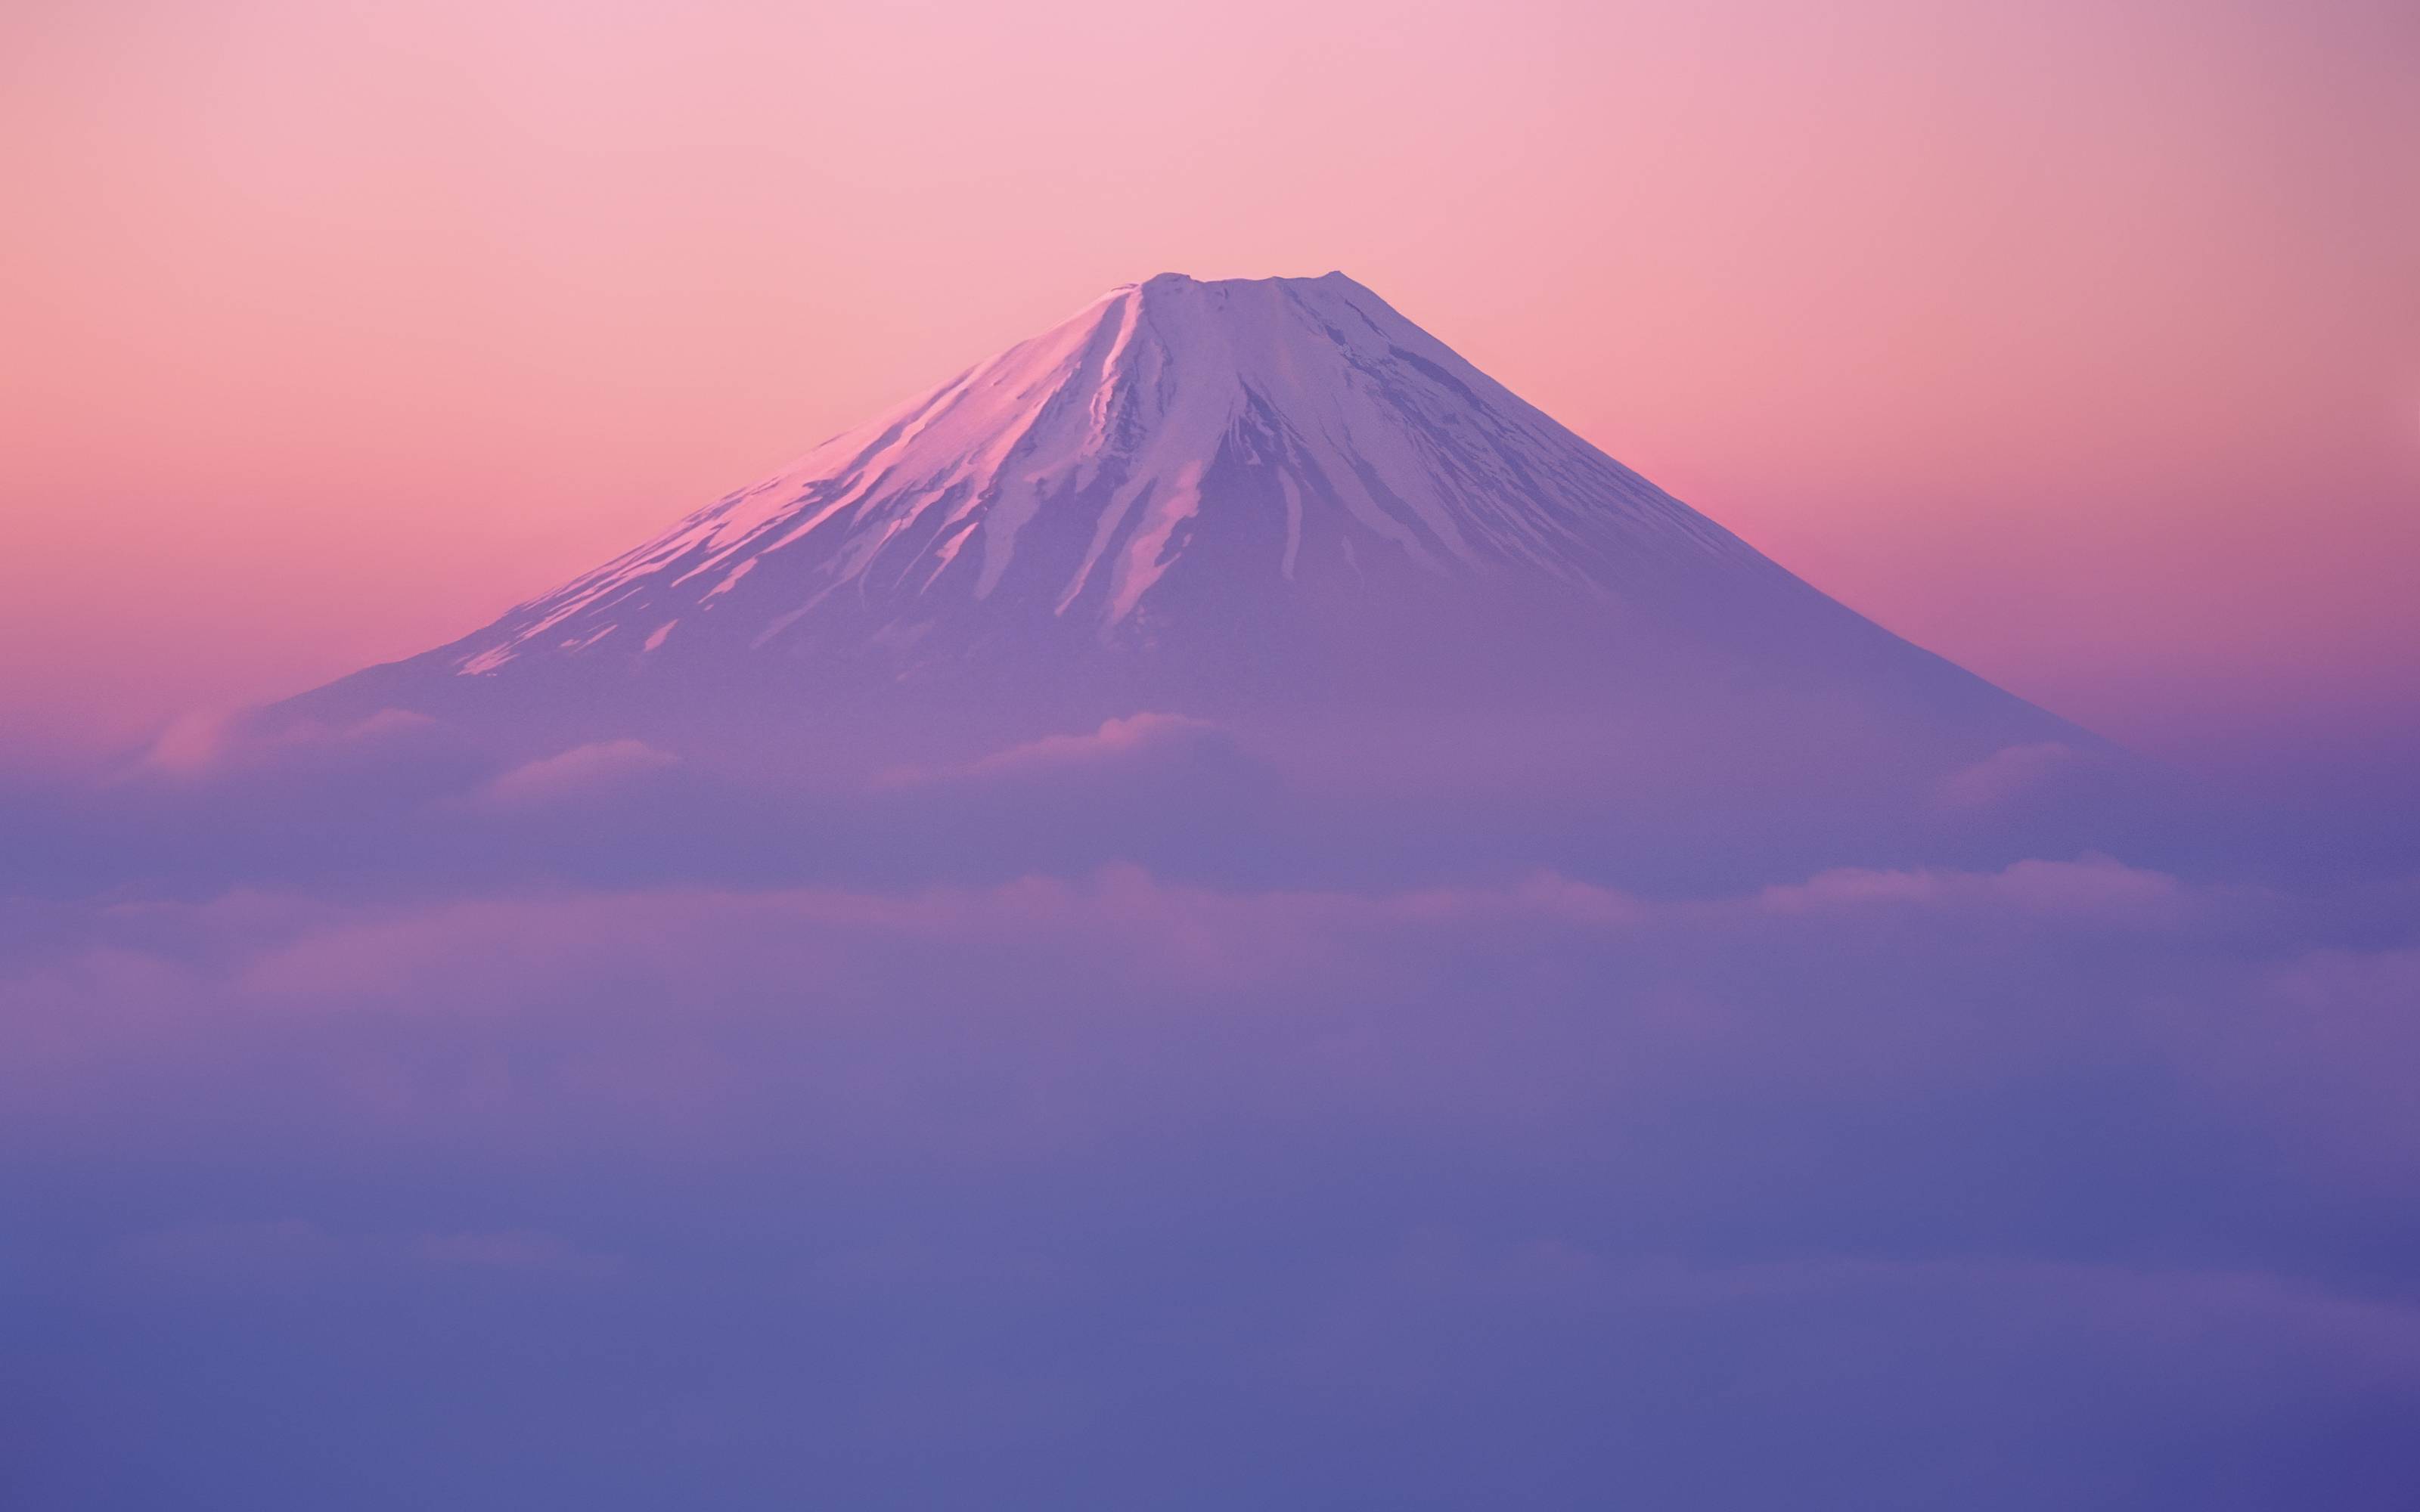 New Mt Fuji Wallpaper In Mac Os X Lion Developer Pre